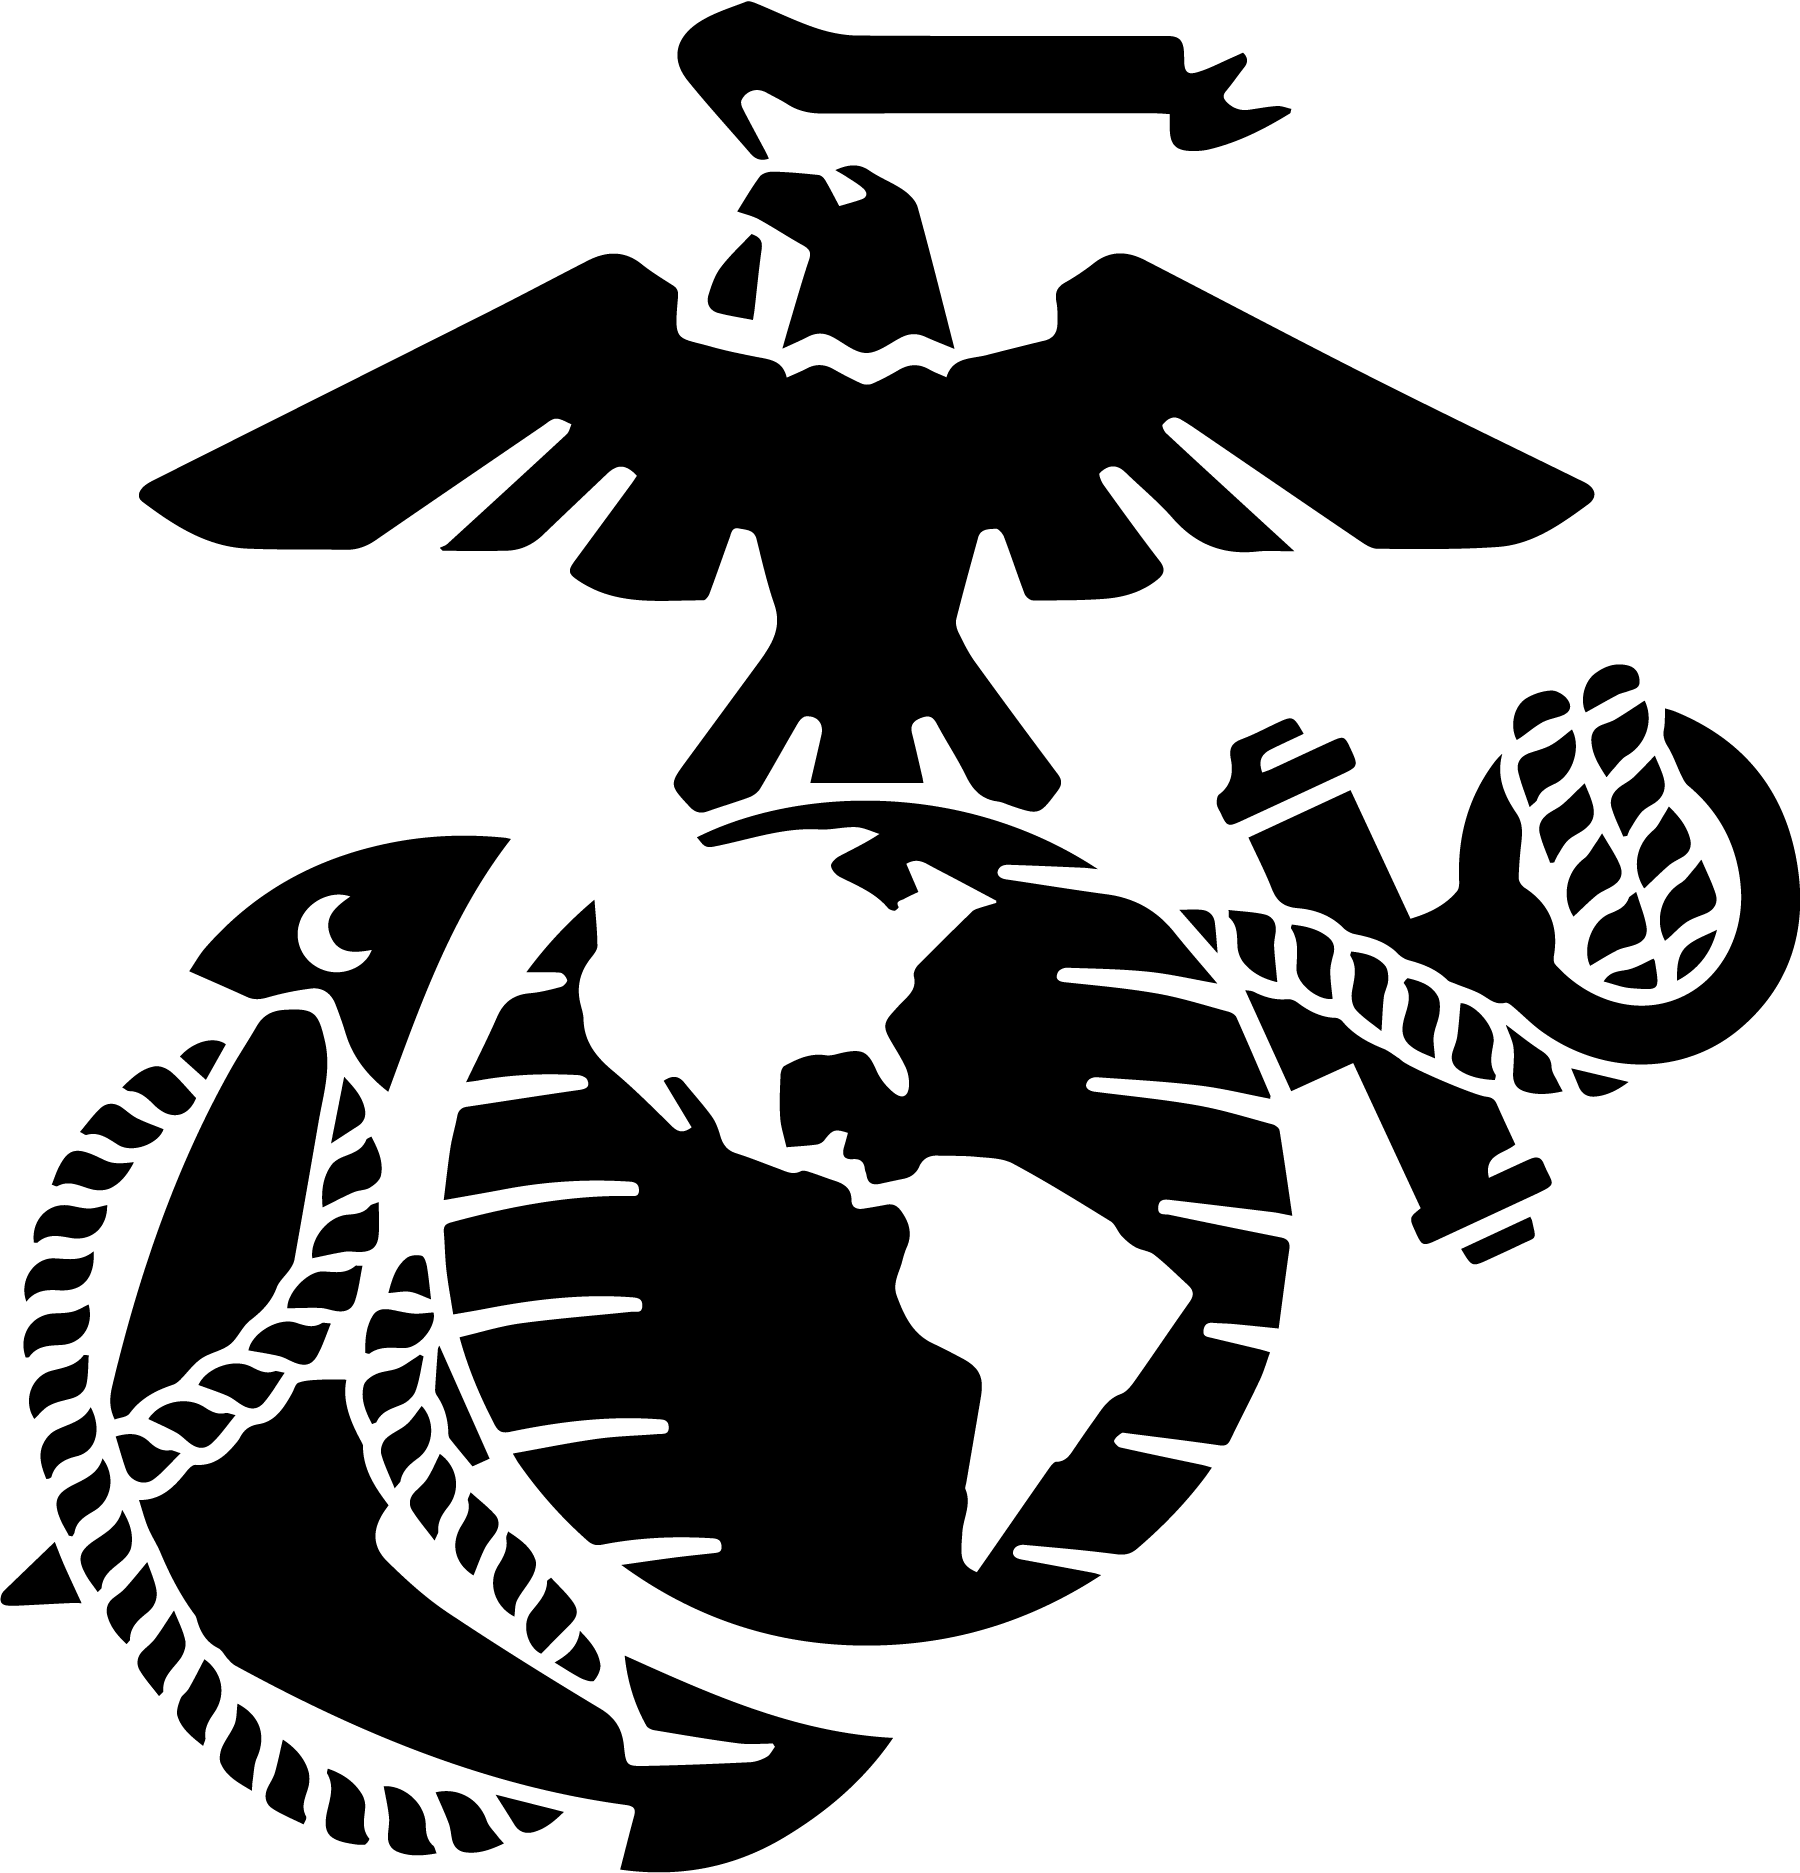 Marine Logo - Pin by Daniel Kozelnik on Logos | Pinterest | Marines, Marine corps ...